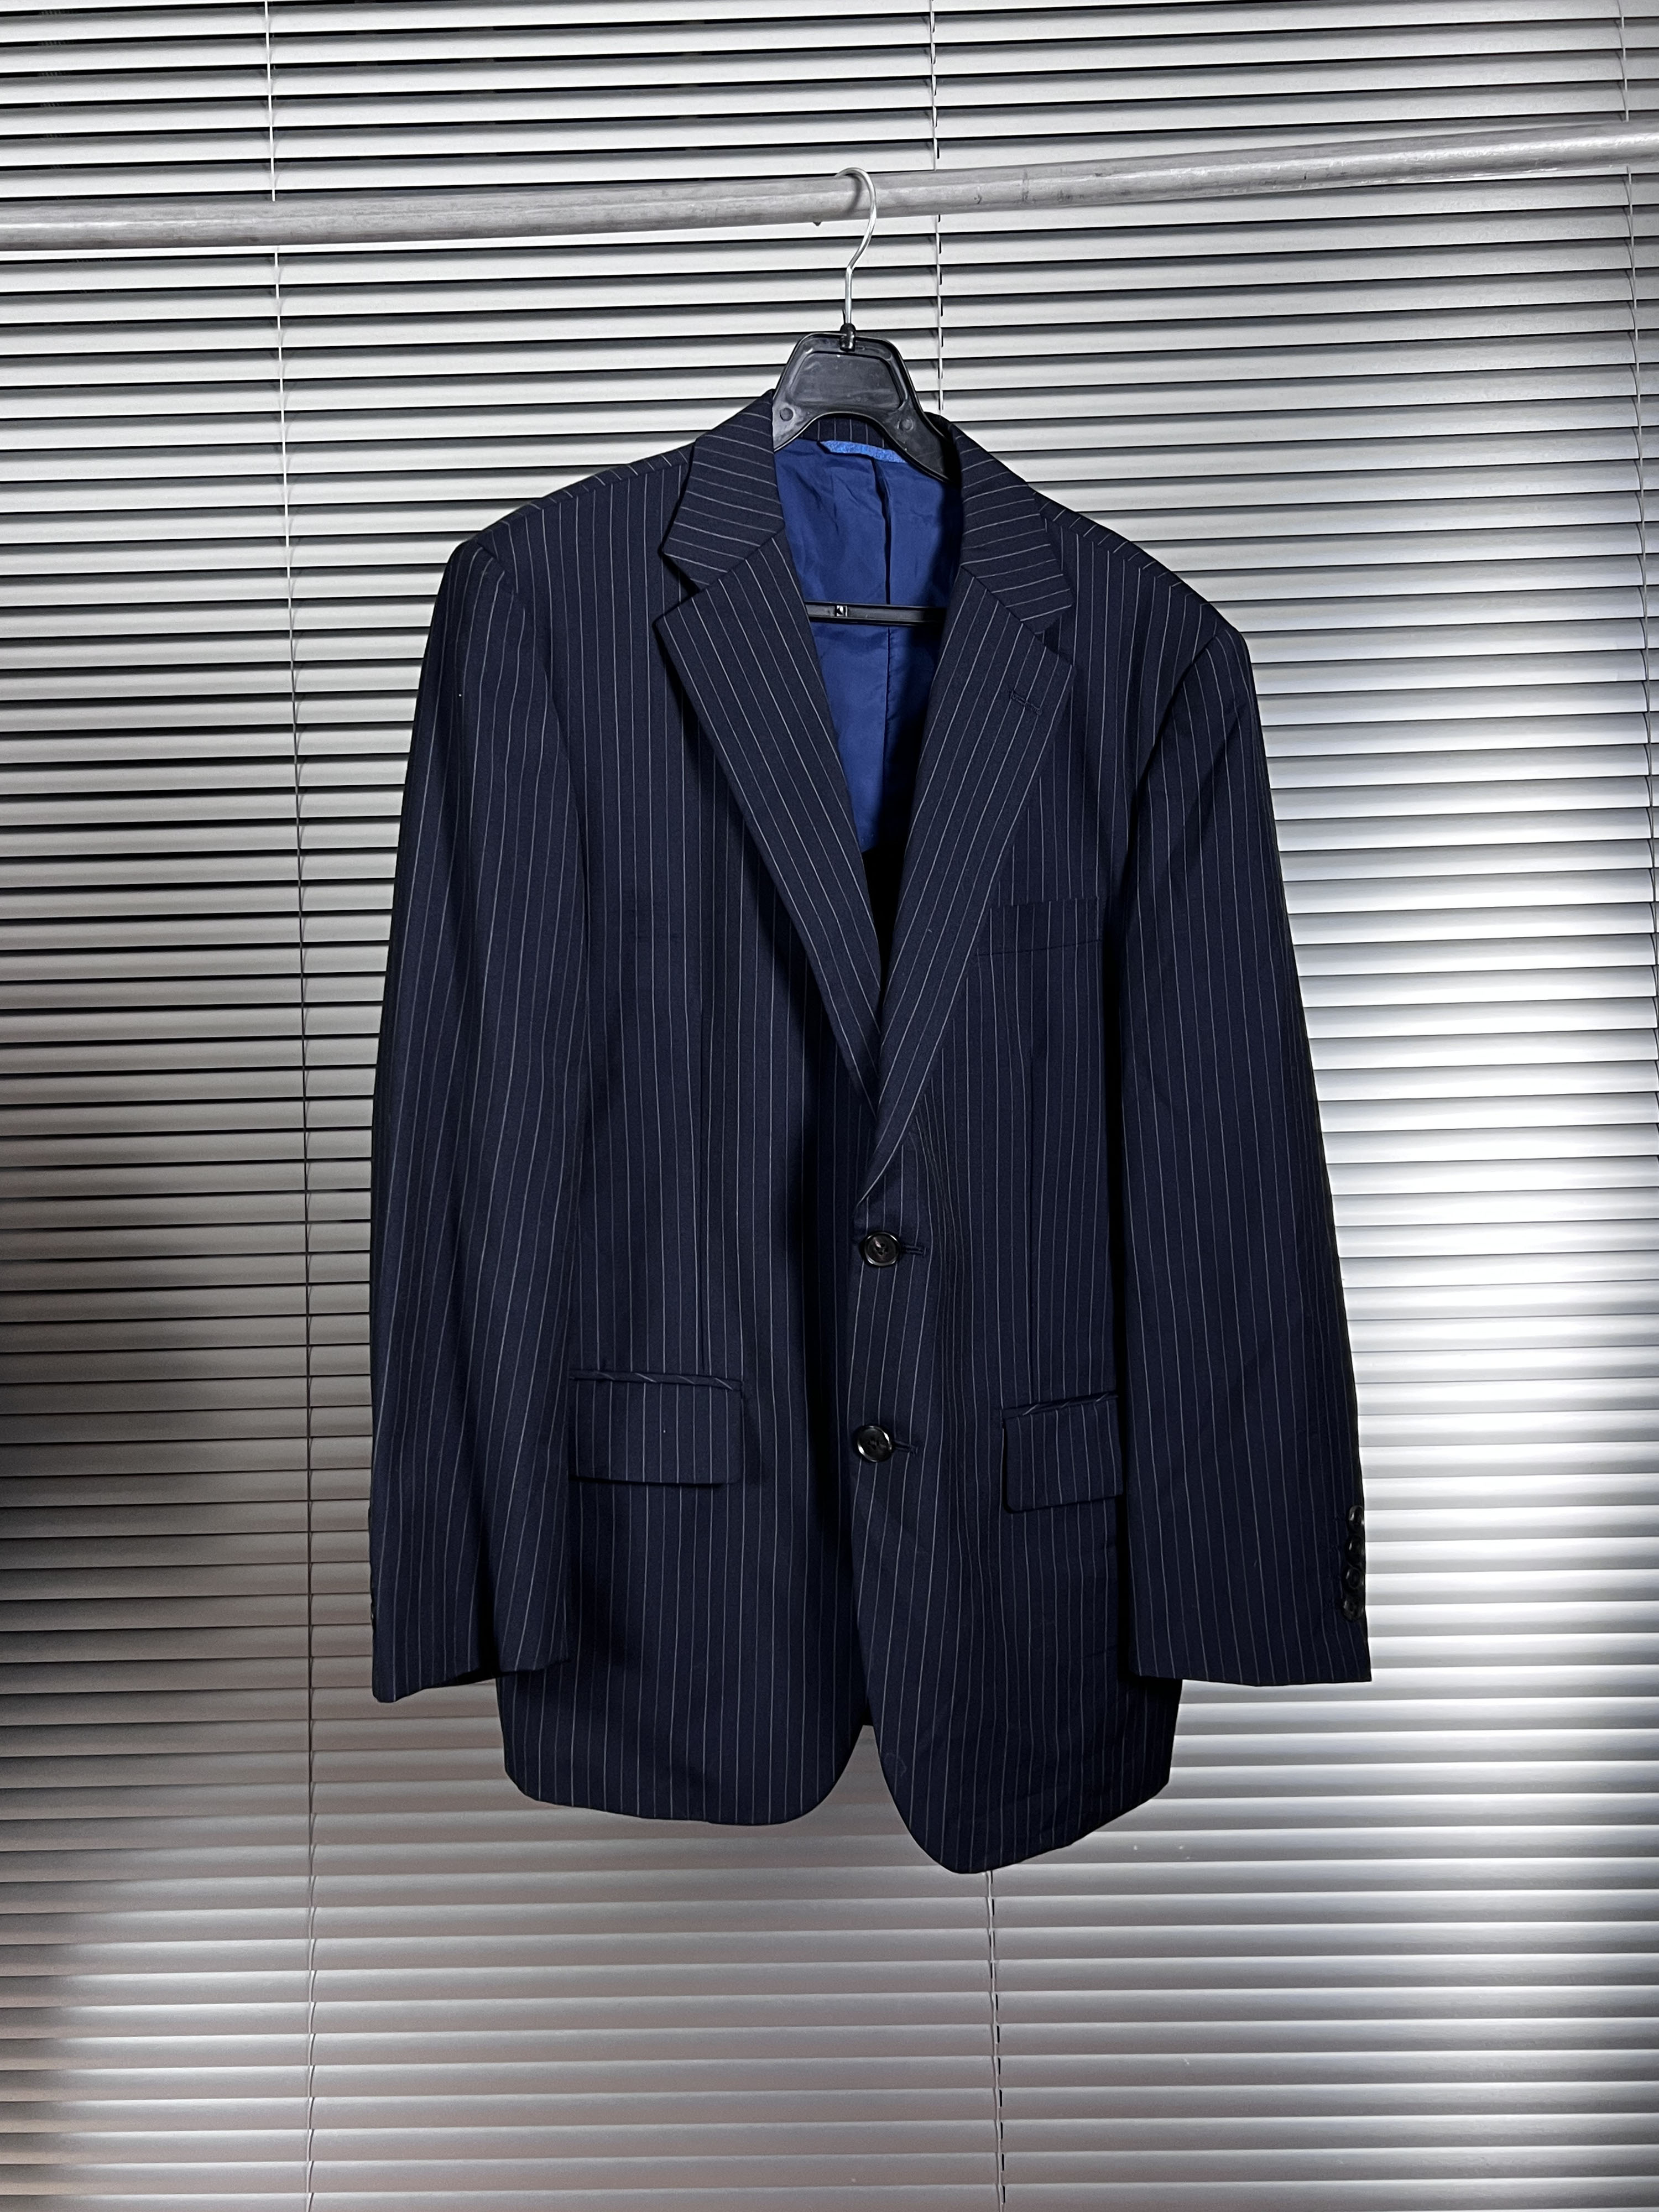 STOVEL &amp; MASNON stripe jacket ( fabric by Lolo piana )